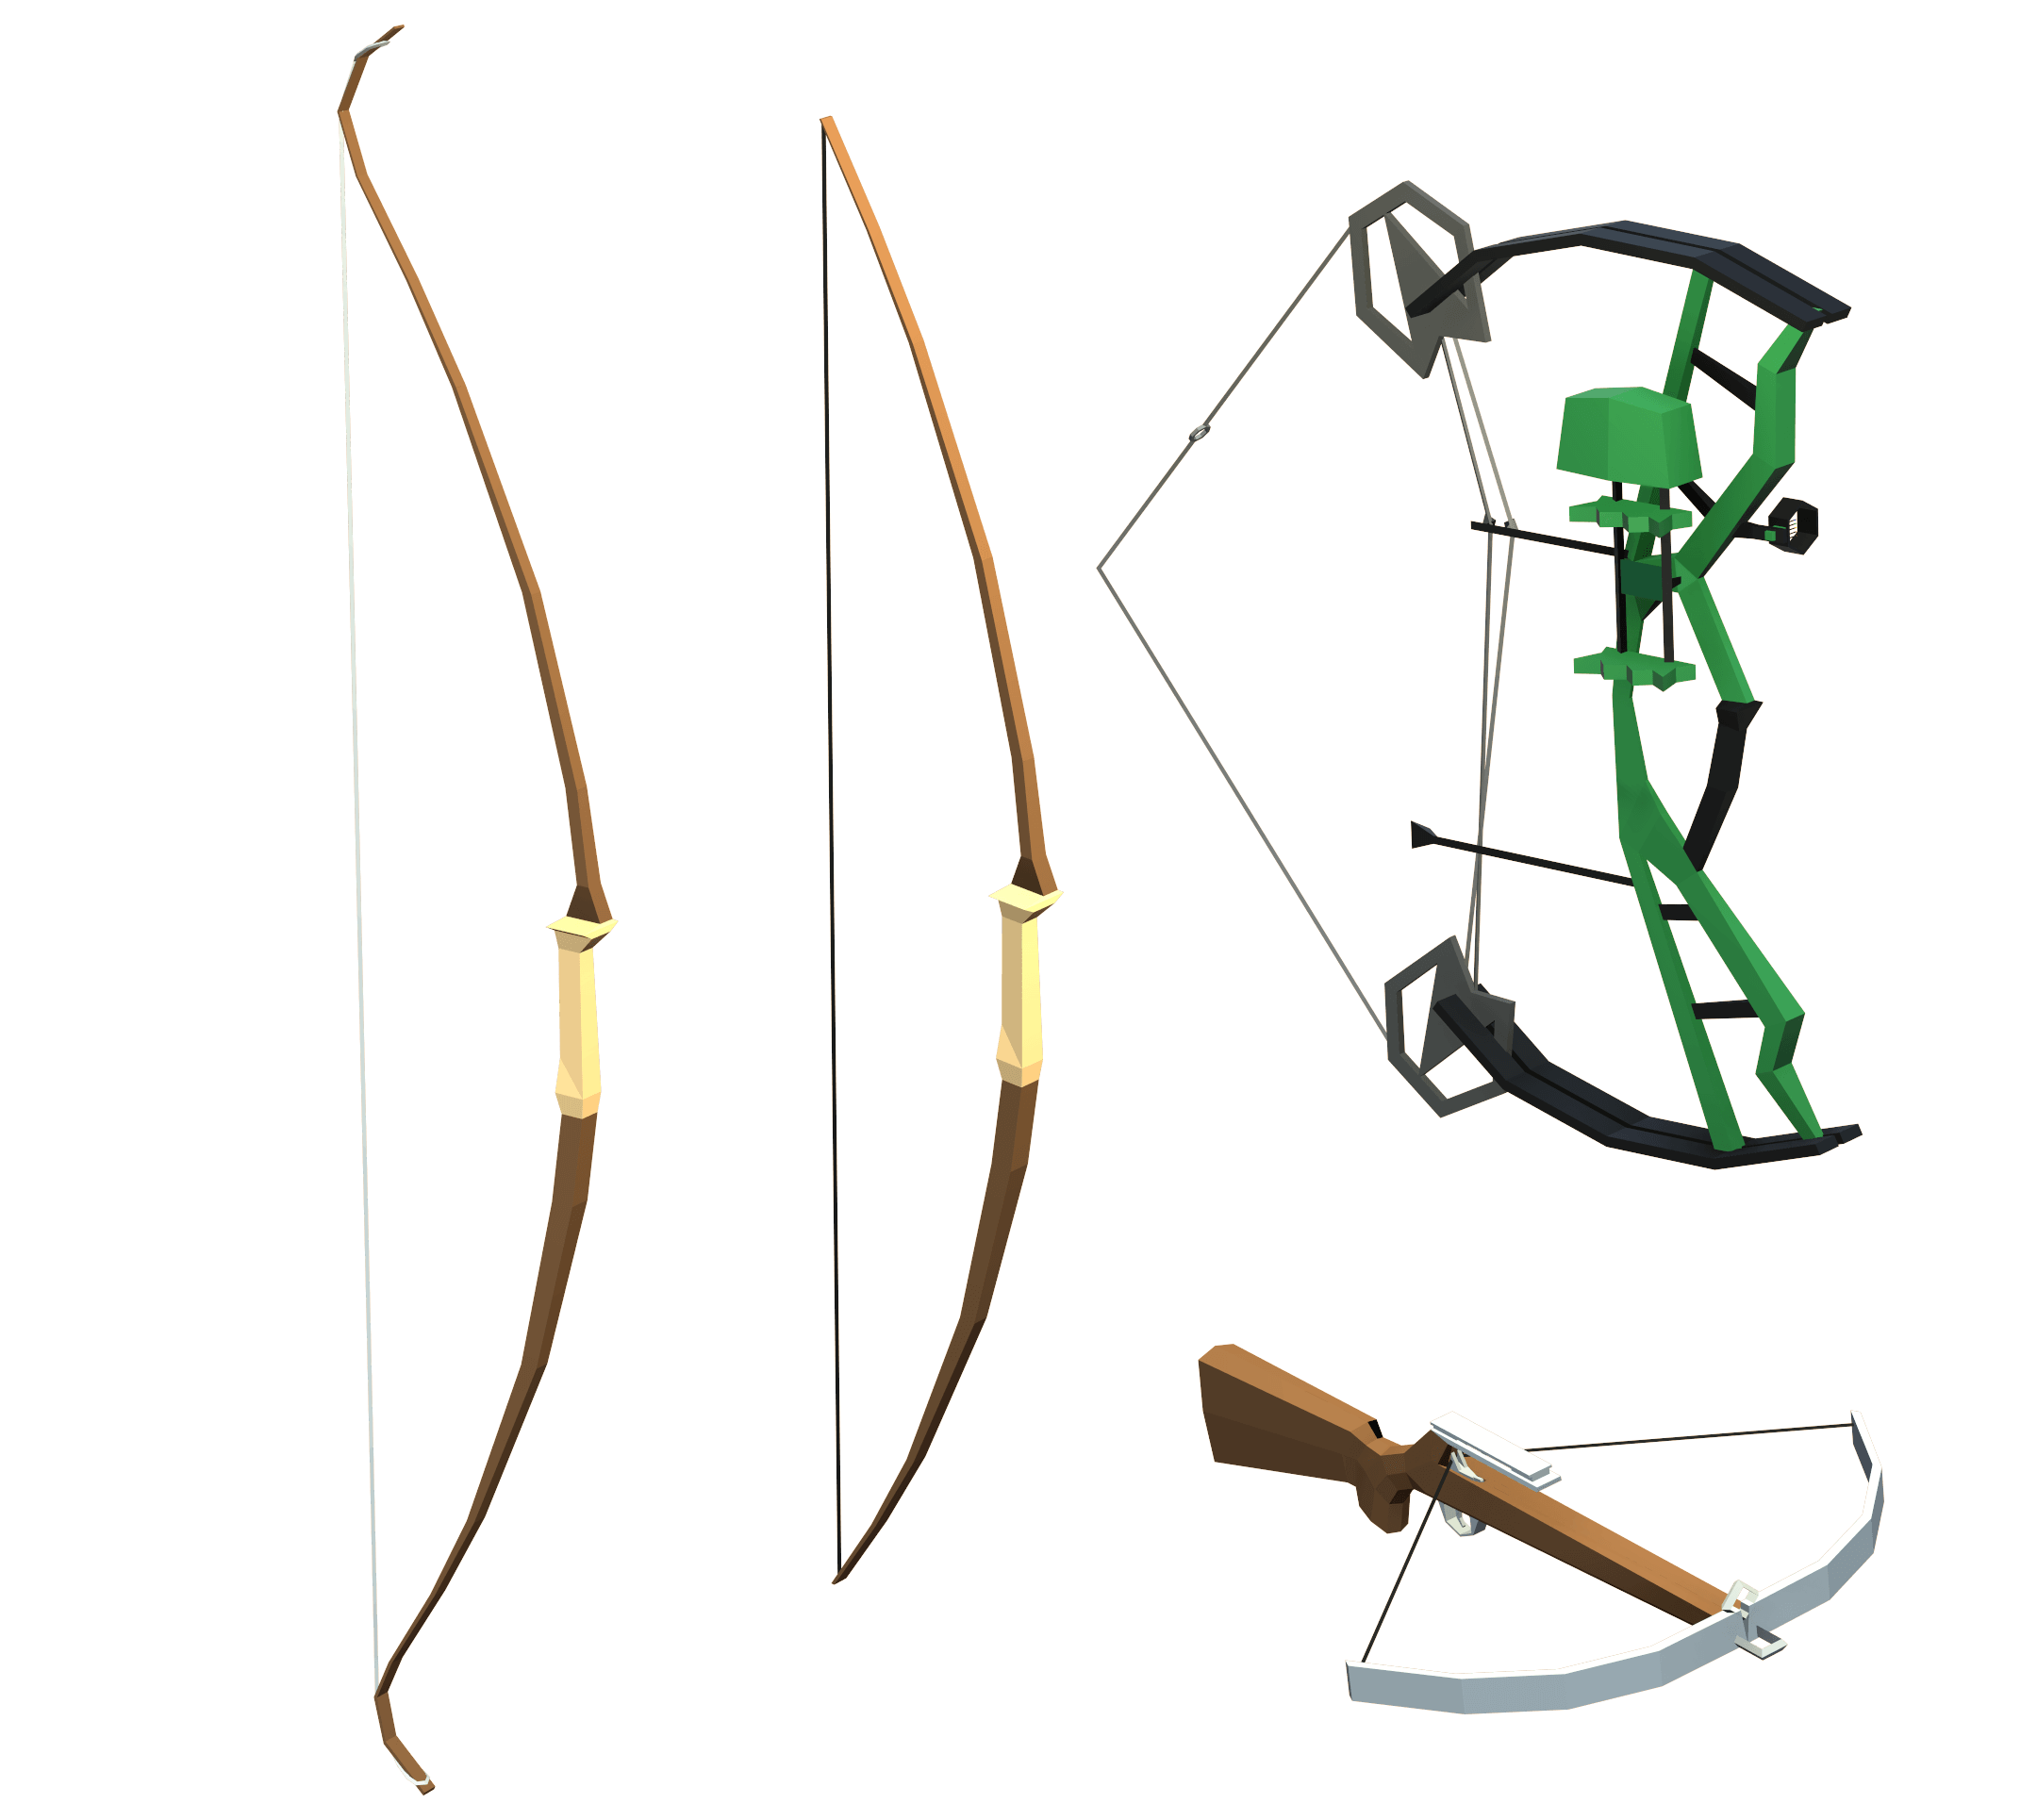 bow-hunting